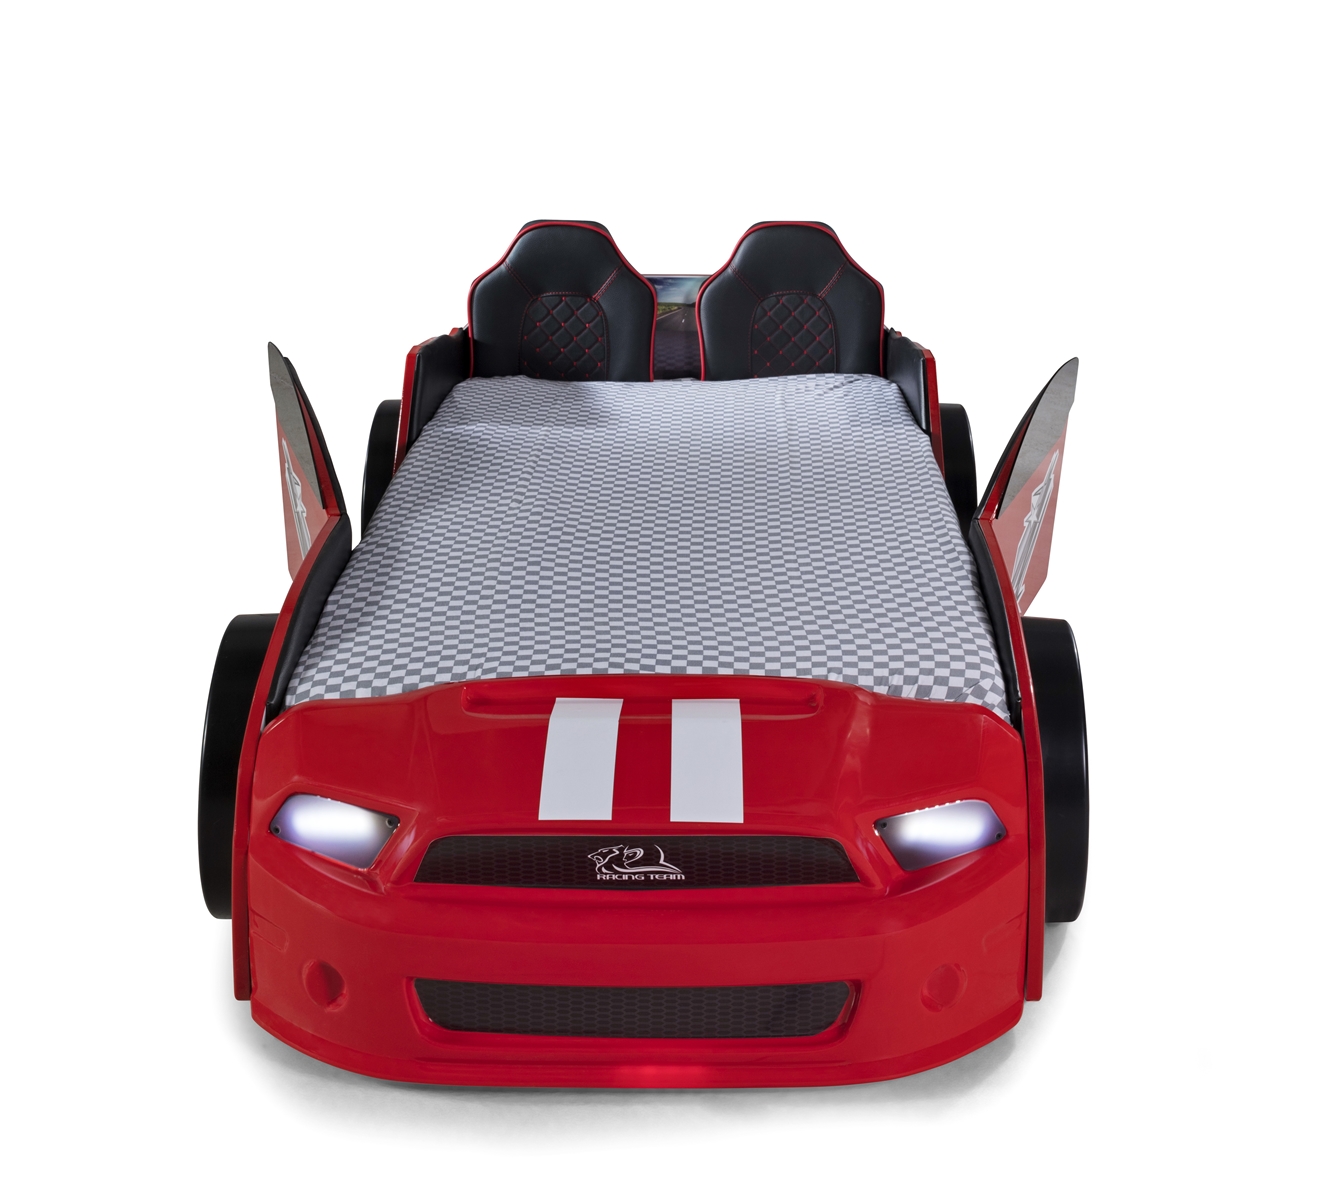 Autobettzimmer Komplett Must Rider Turbo 4-teilig Rot